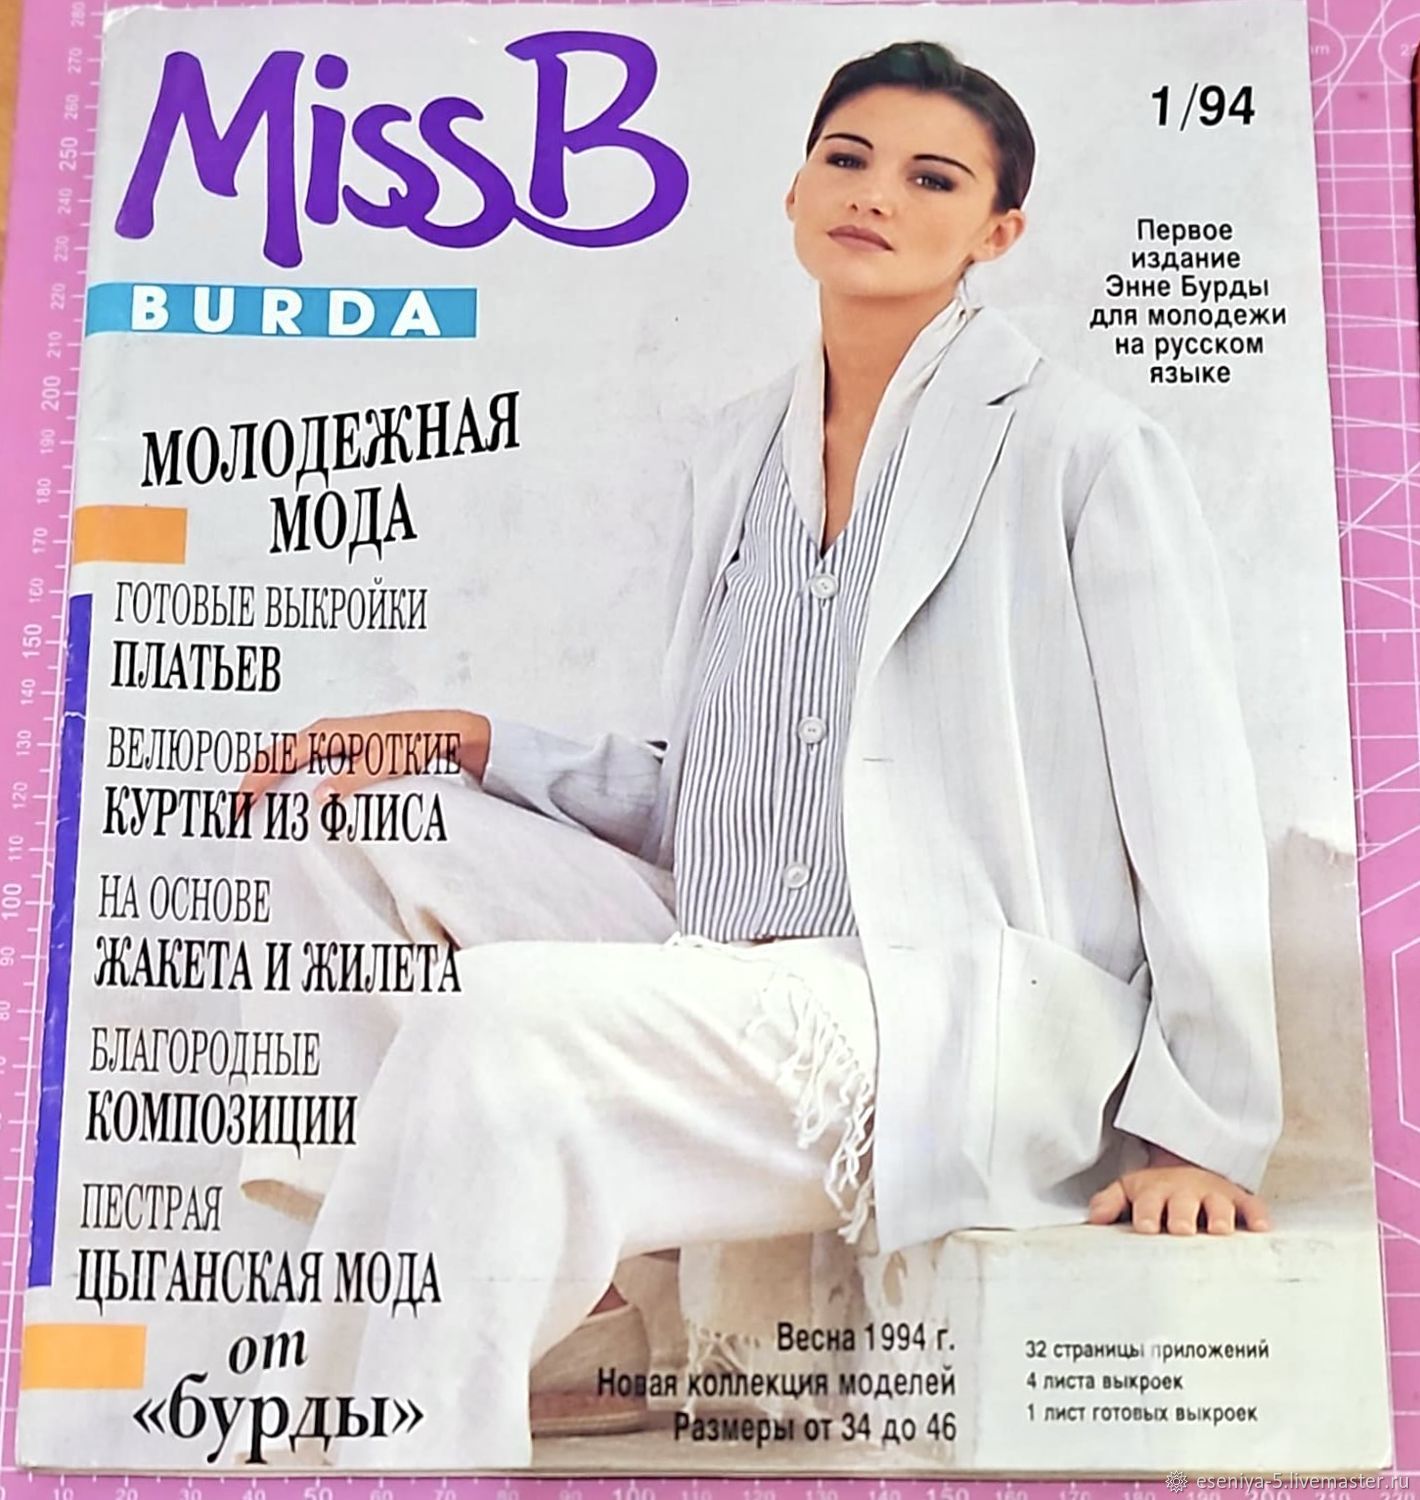 Burda Special Magazine - Miss B Spring’94 (1/94) new, Magazines, Moscow,  Фото №1